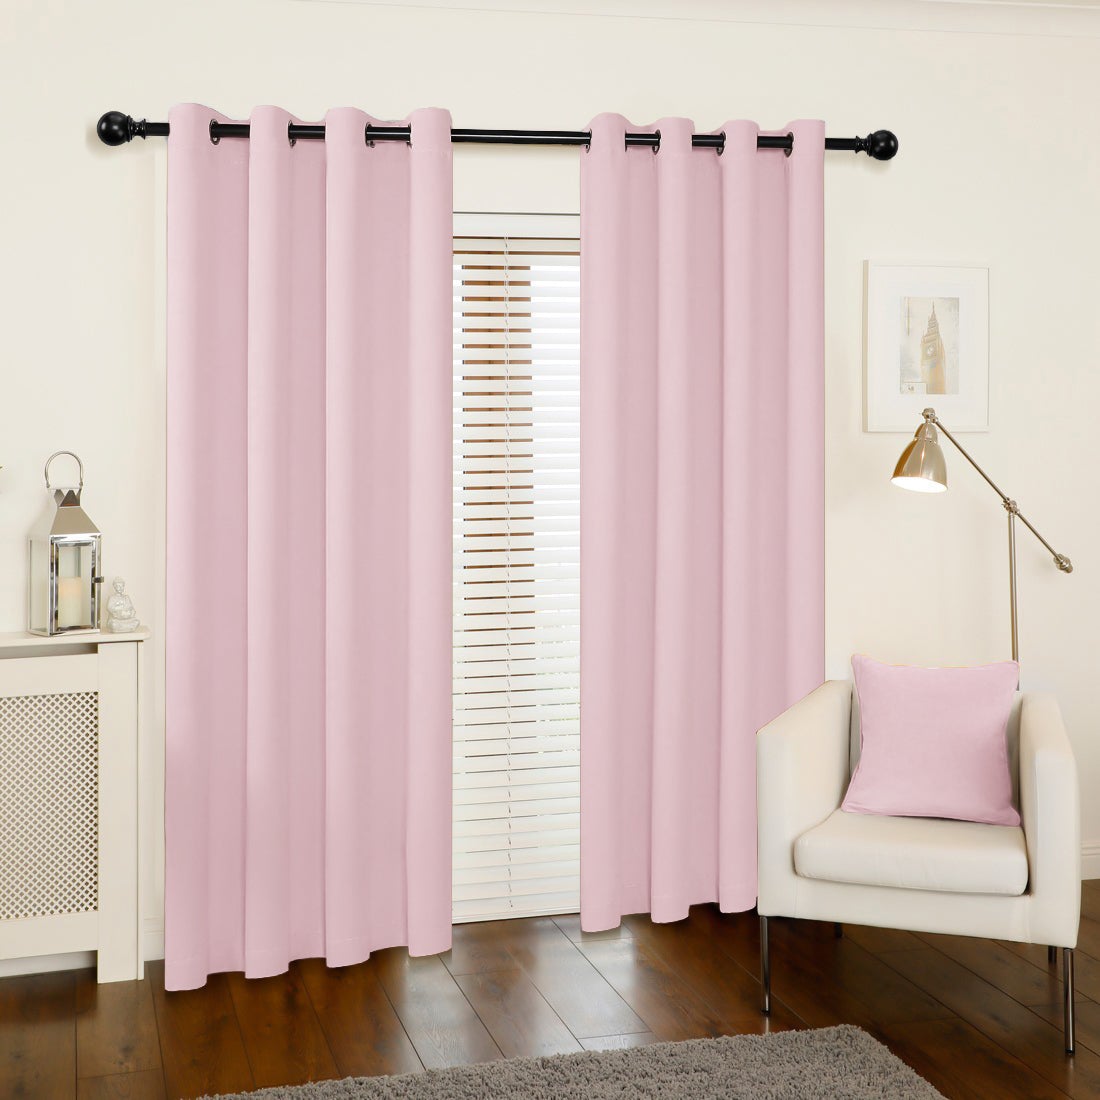 Akarise Blackout Curtains for Bedroom Living Room - 2 Panels,Pink